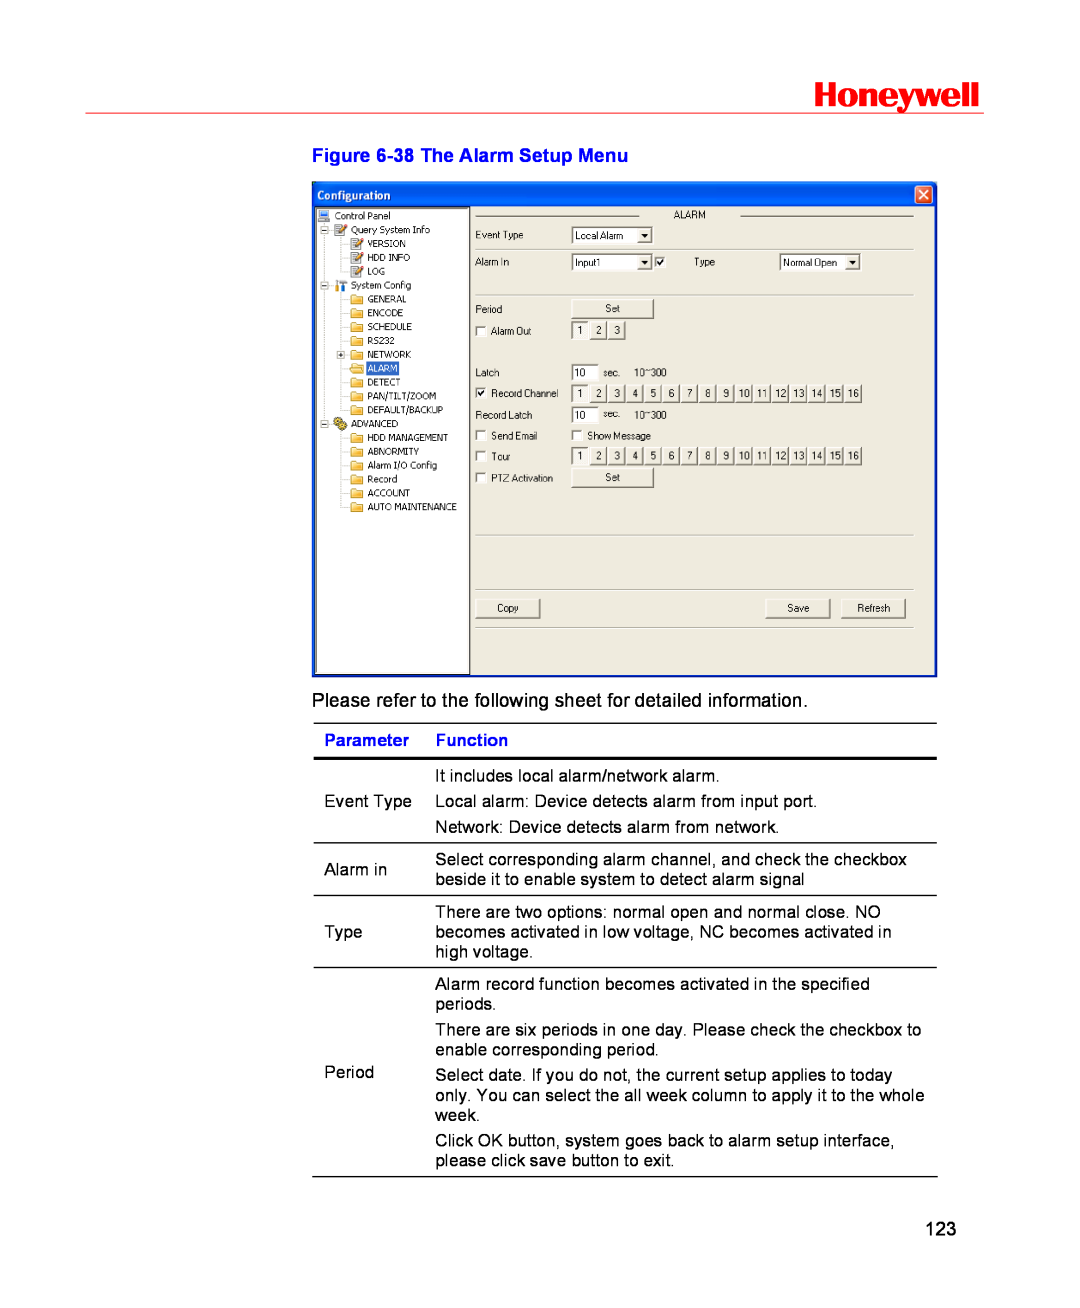 Honeywell HSVR-16, HSVR-04 user manual Honeywell, 38 The Alarm Setup Menu, Parameter, Function 